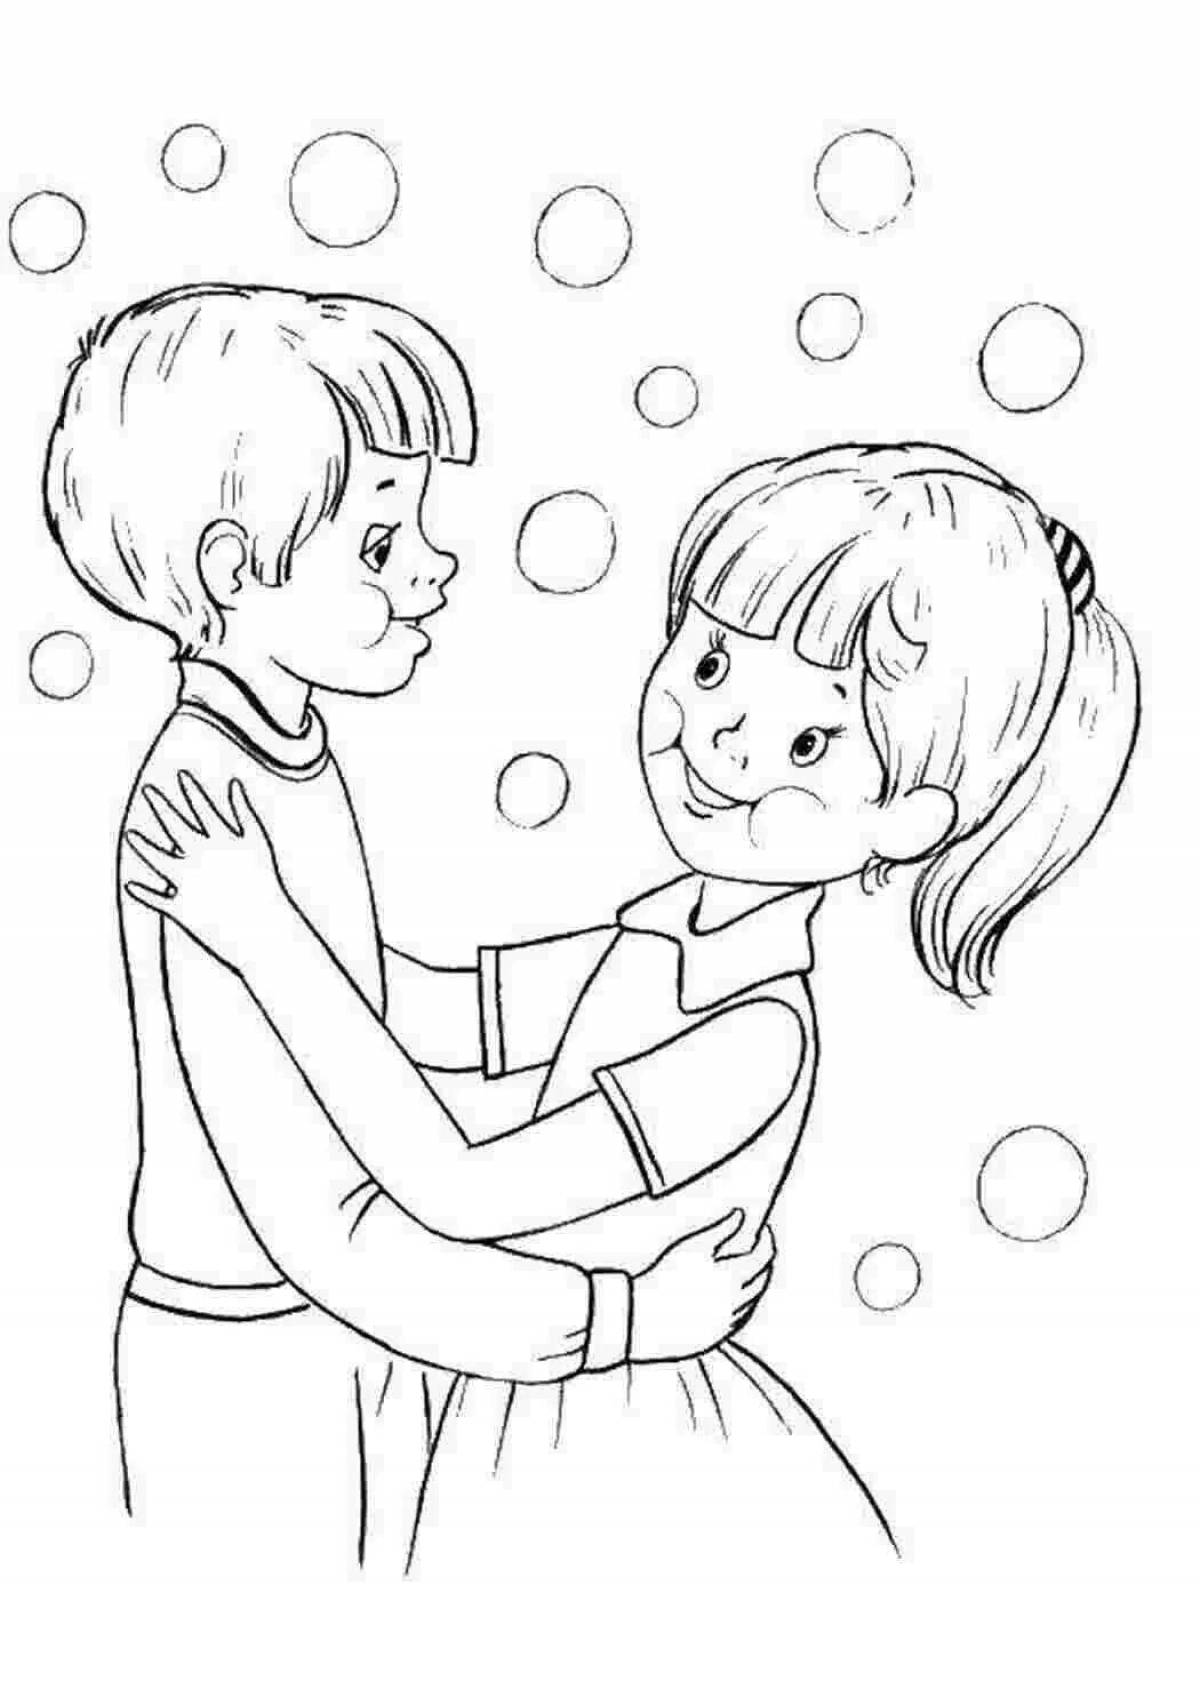 Hug day fun coloring book for kids